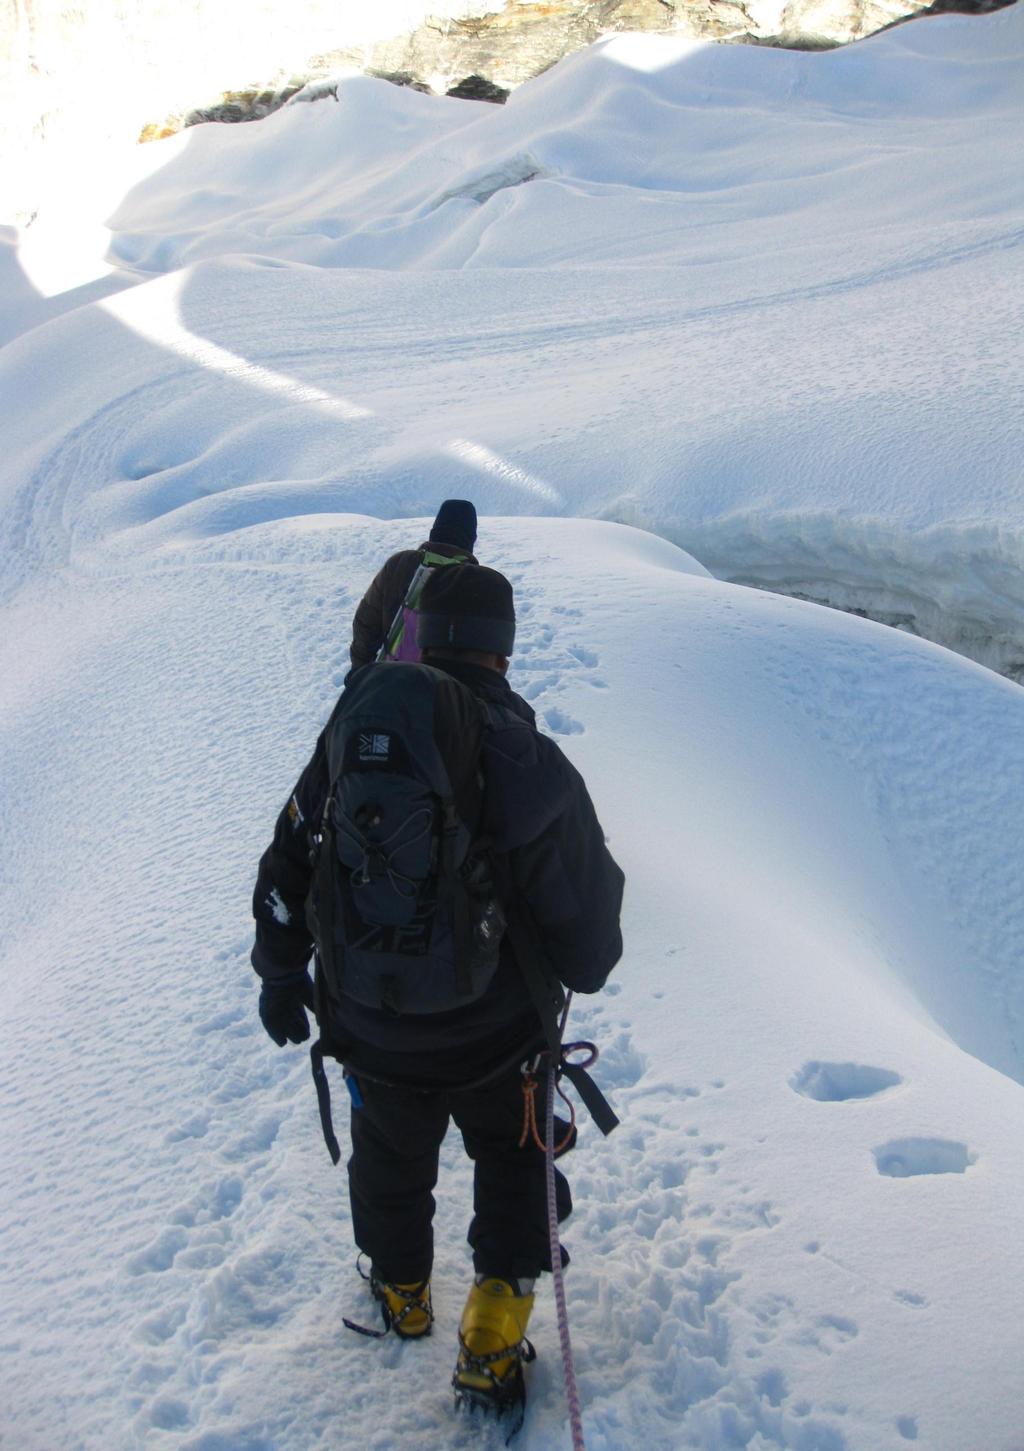 ISLAND PEAK CLIMBING 21 days Trip route: Lukla Namche EBC - Island Peak summit - Lukla Activities: Trekking, Rock climbing, Sightseeing, Climbing & Expedition Difficulty: Adventurous to challenging